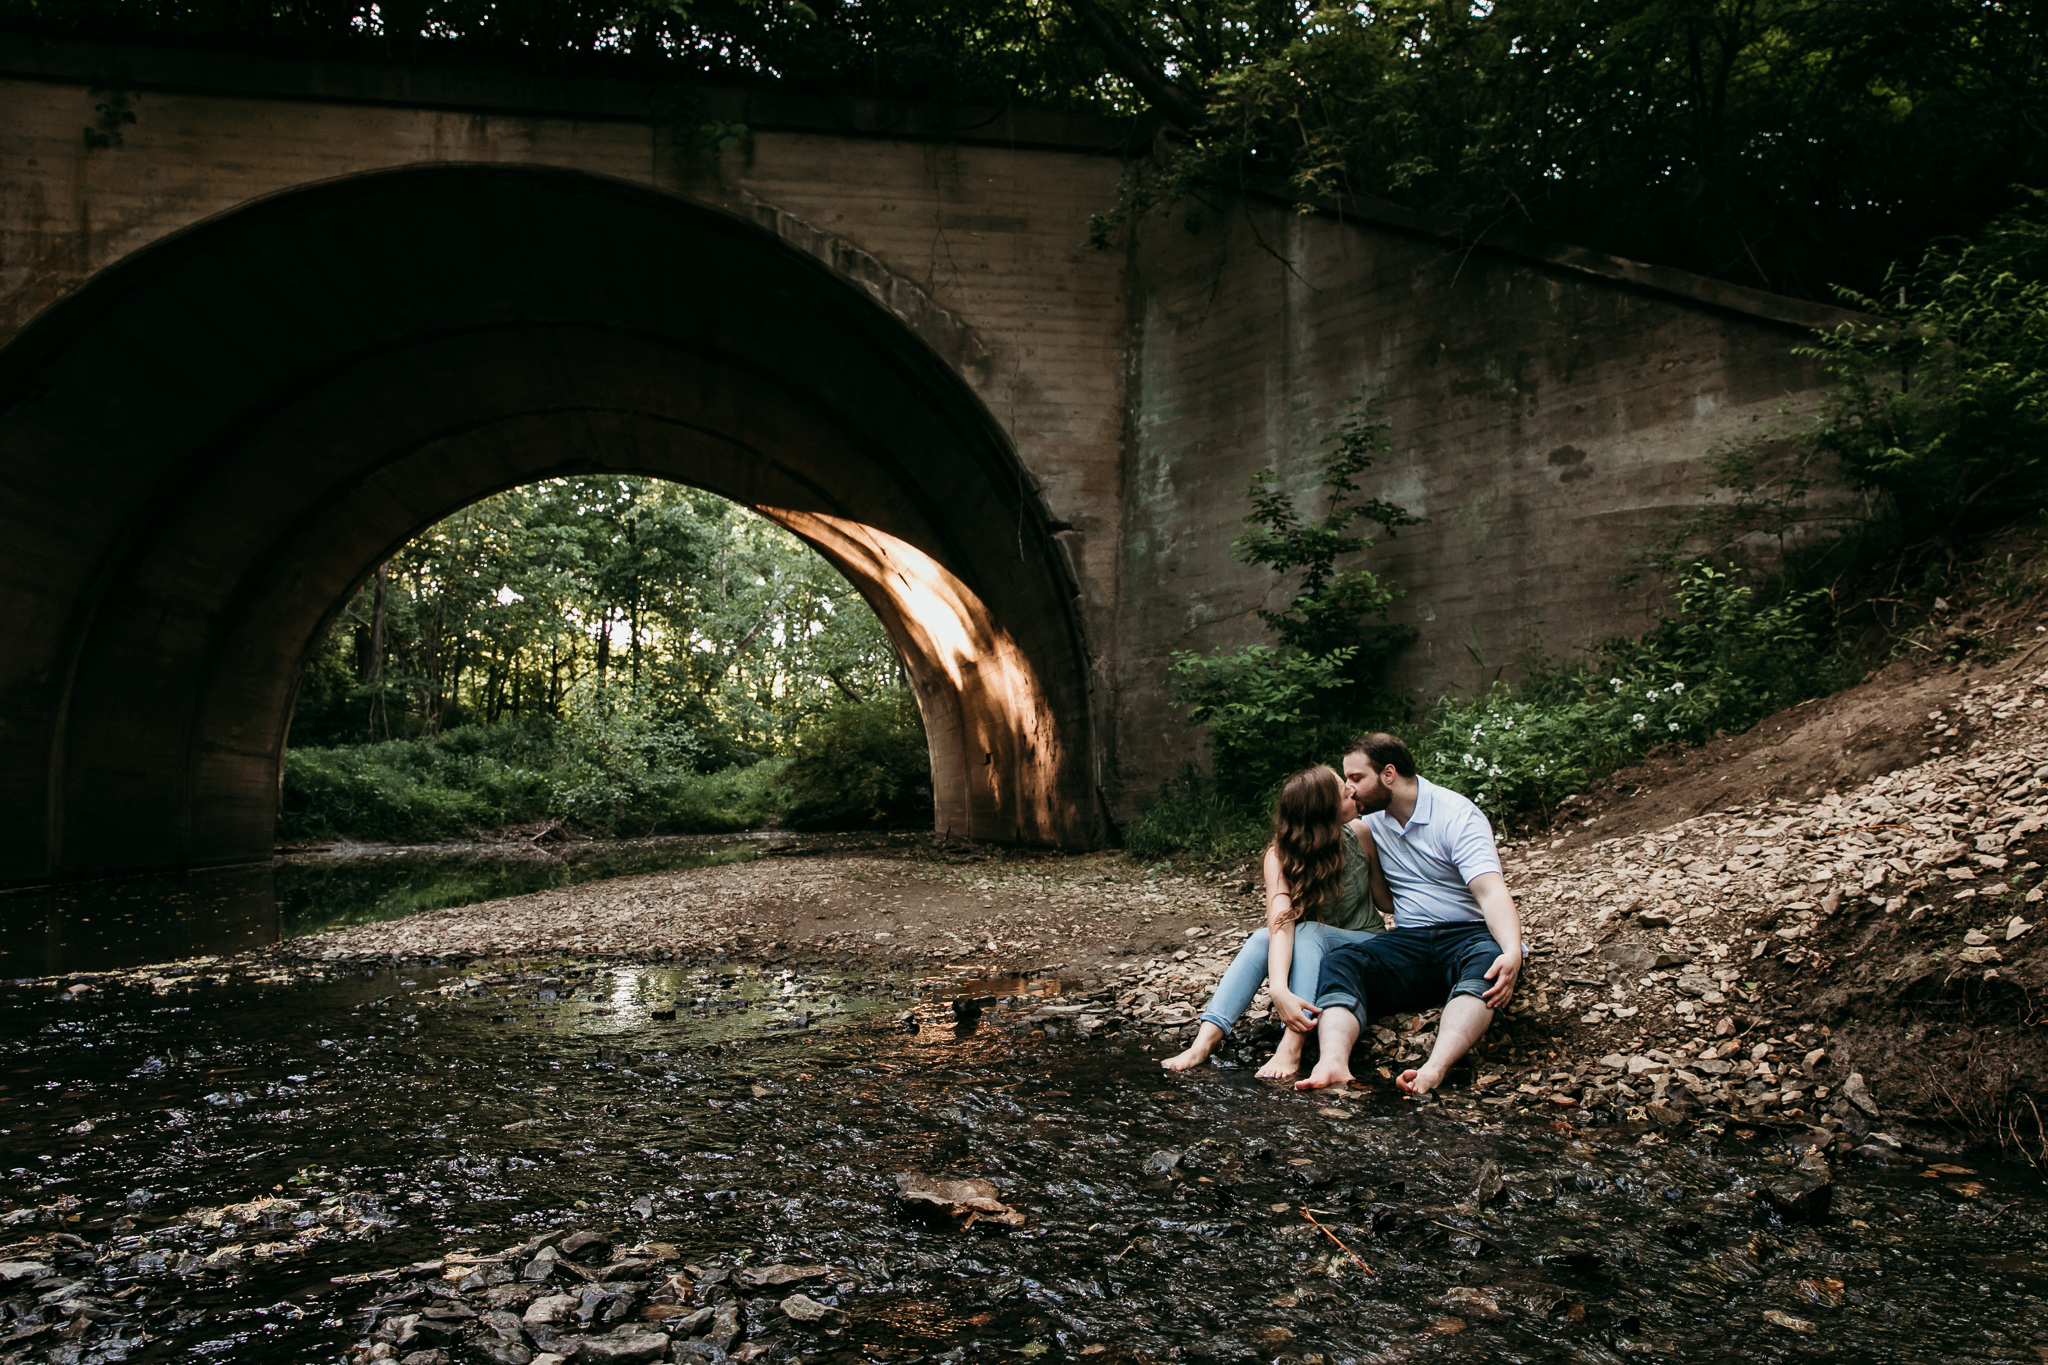 Matt & Kara | Kansas City Engagement Photography in Forest by Merry Ohler | Kansas City Wedding Photographer